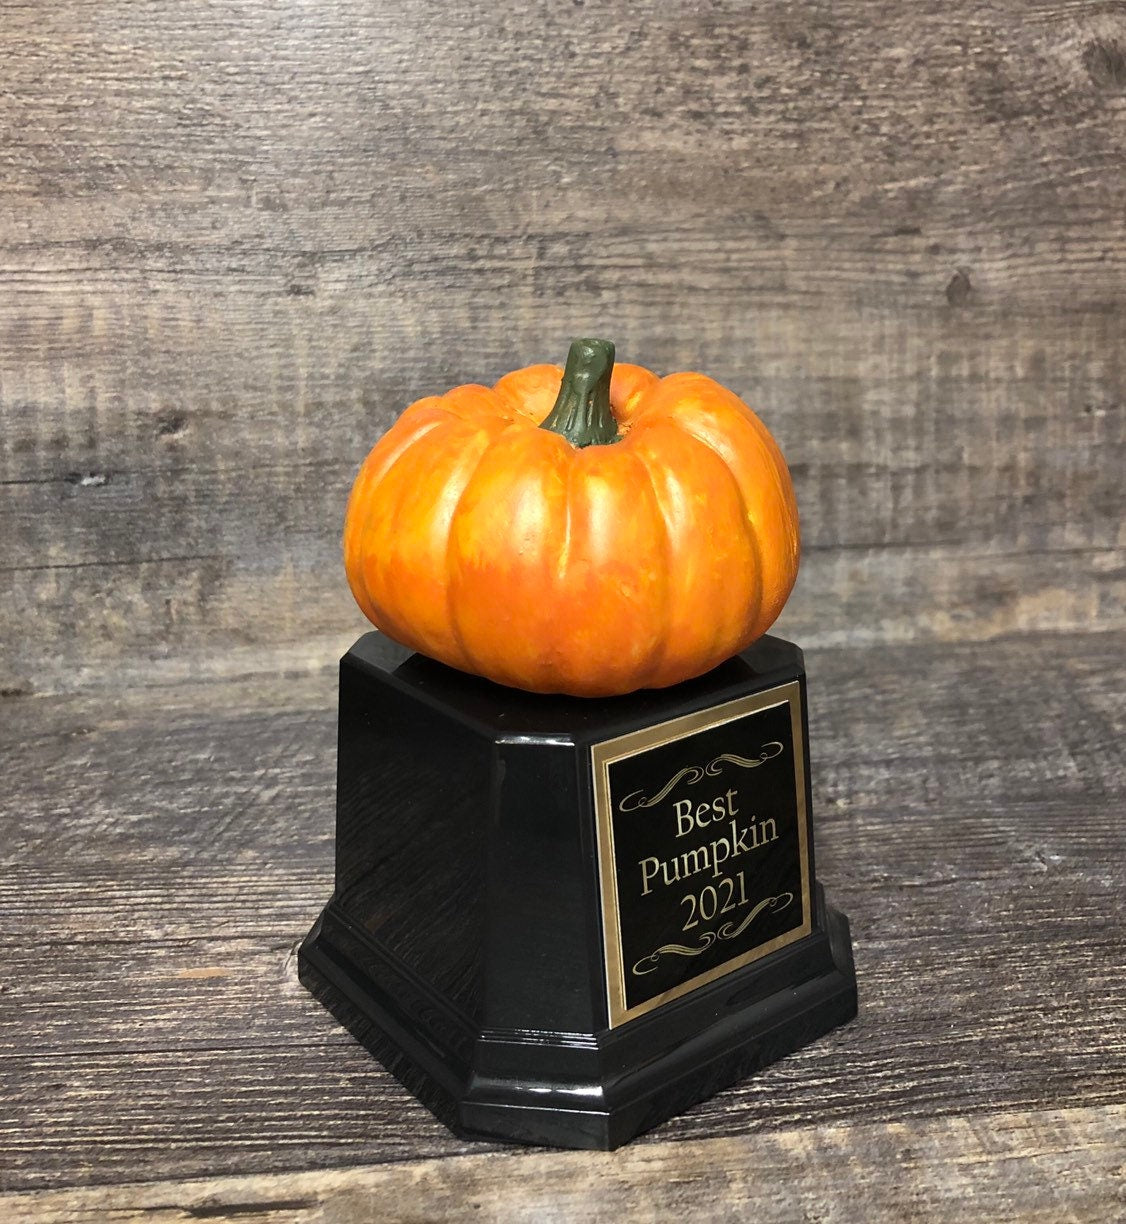 Halloween Trophy Trophies Costume Contest Winner Mini Pumpkin Carving Contest Jack O Lantern Trophy Trunk or Treat Elegant Glitter